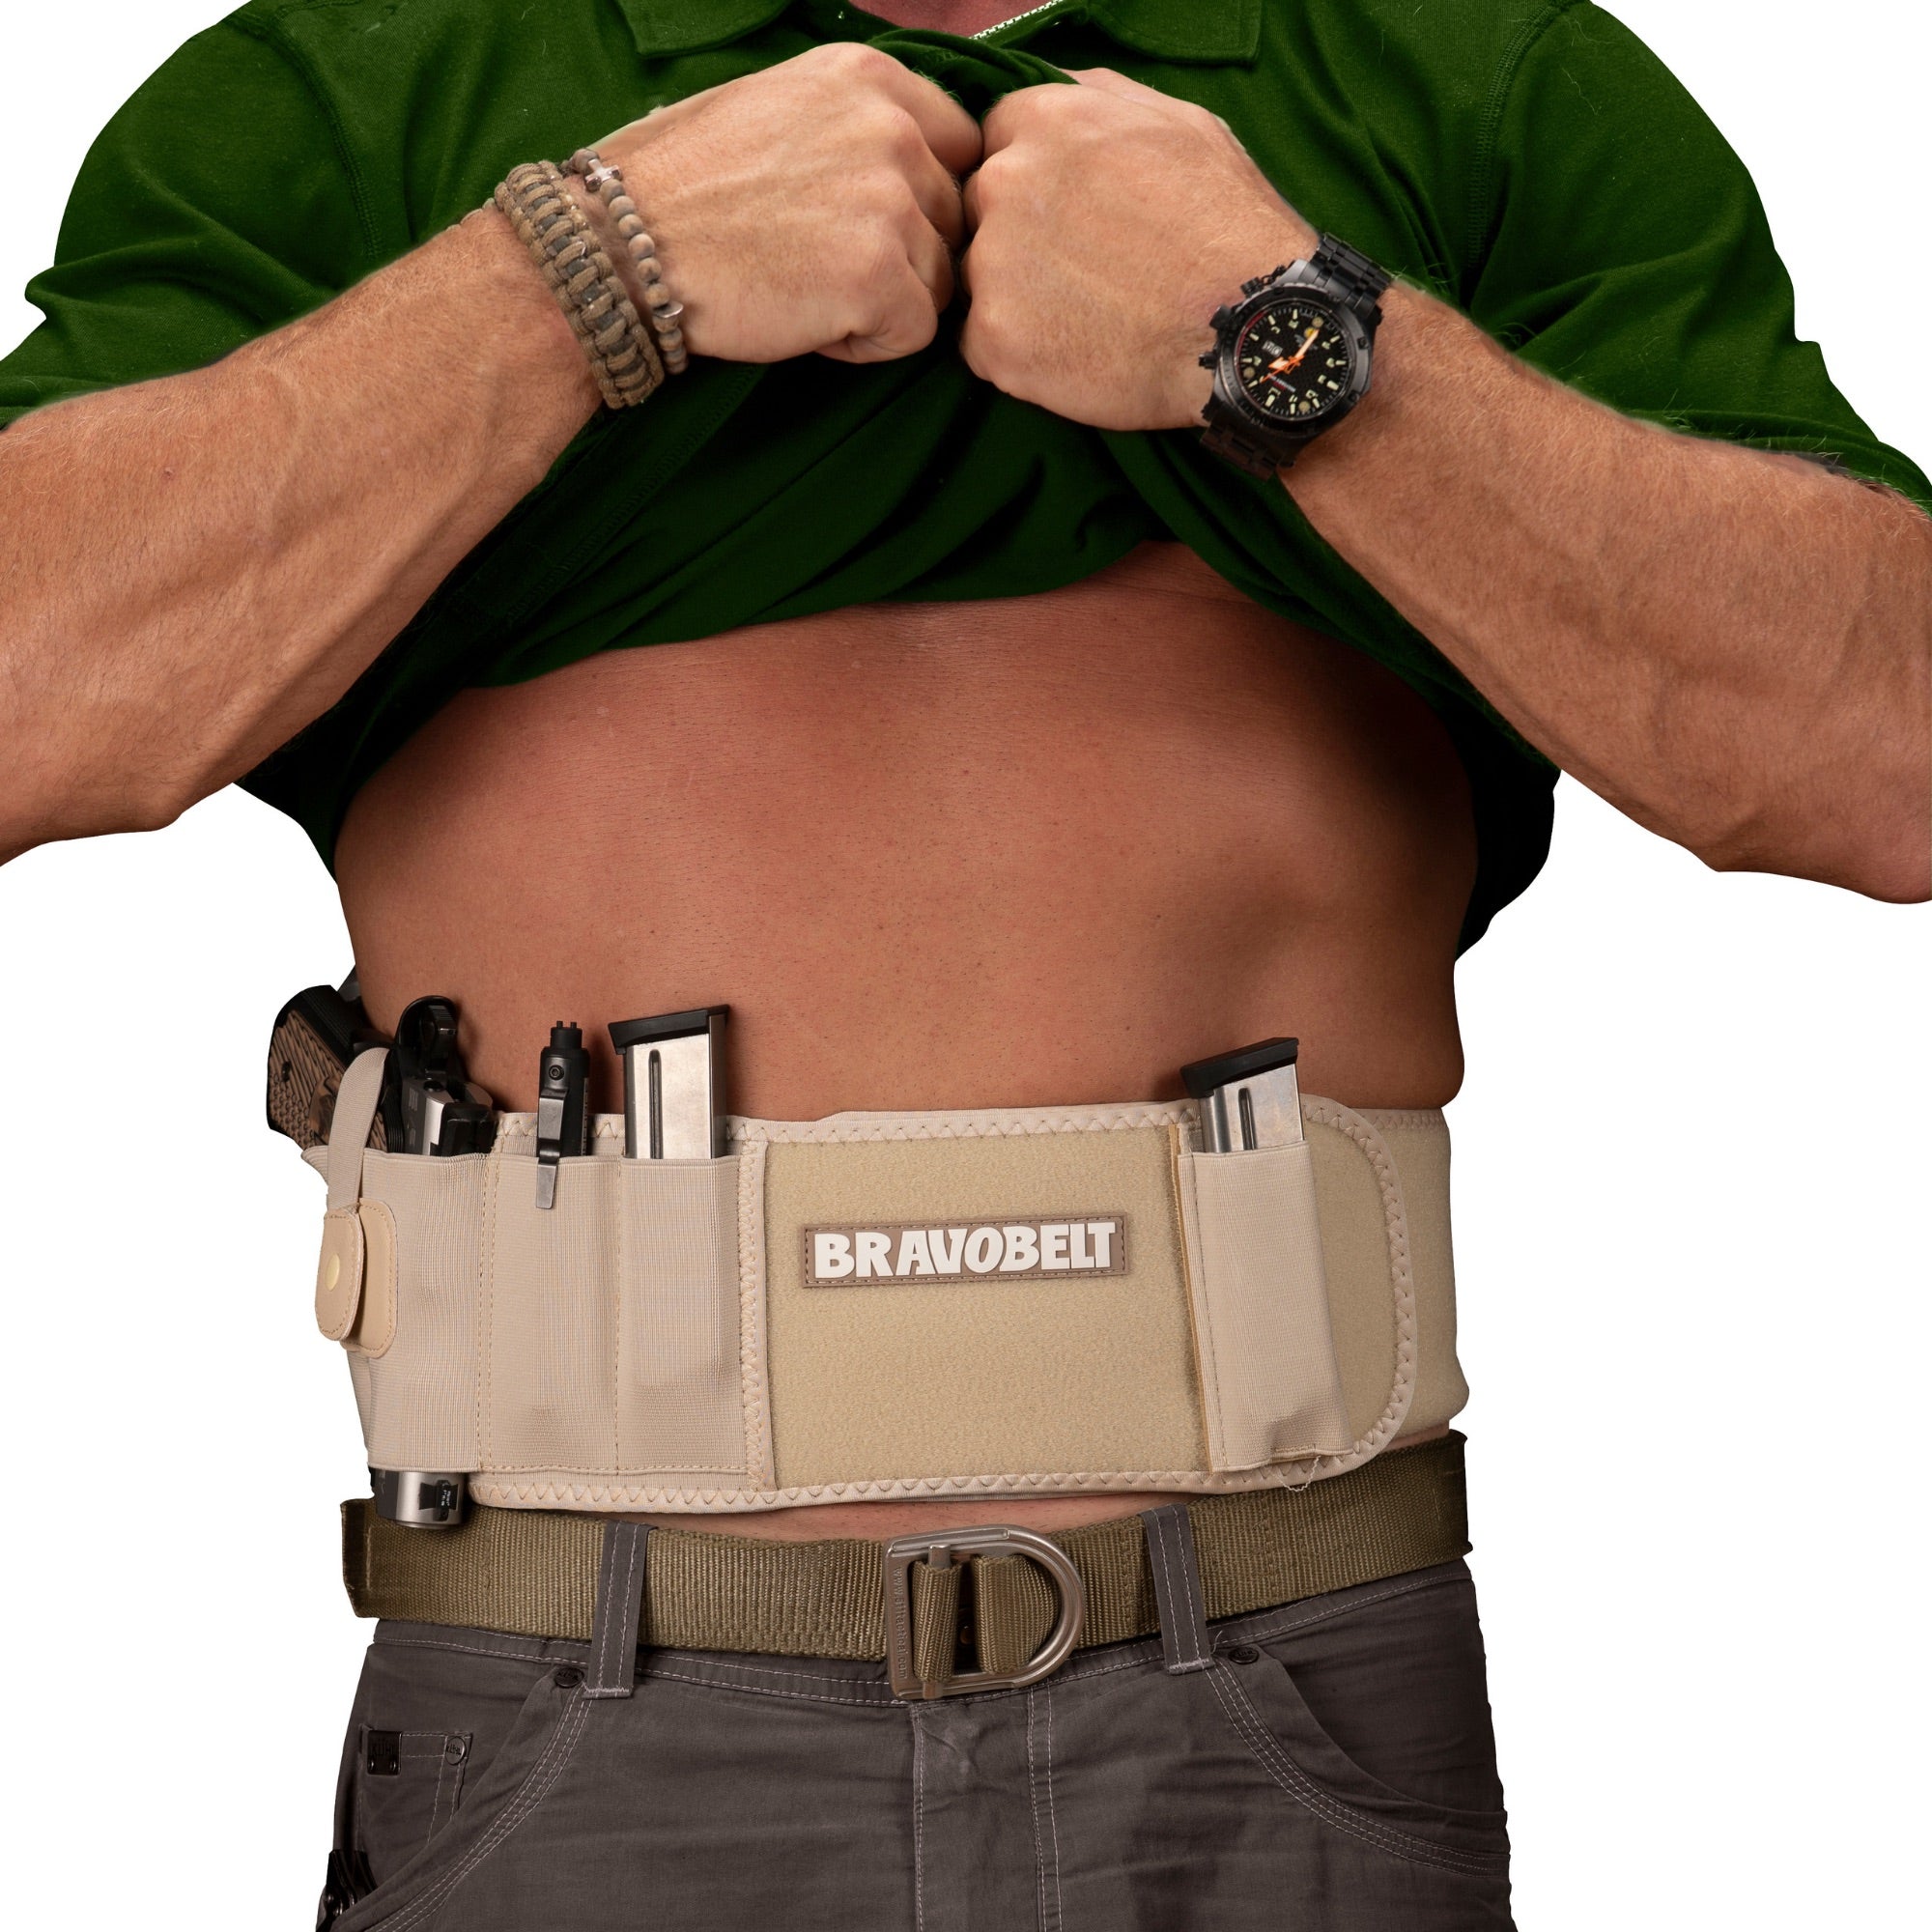 BravoBelt Belly Band Holster for Concealed Carry - Unisex - Tactical